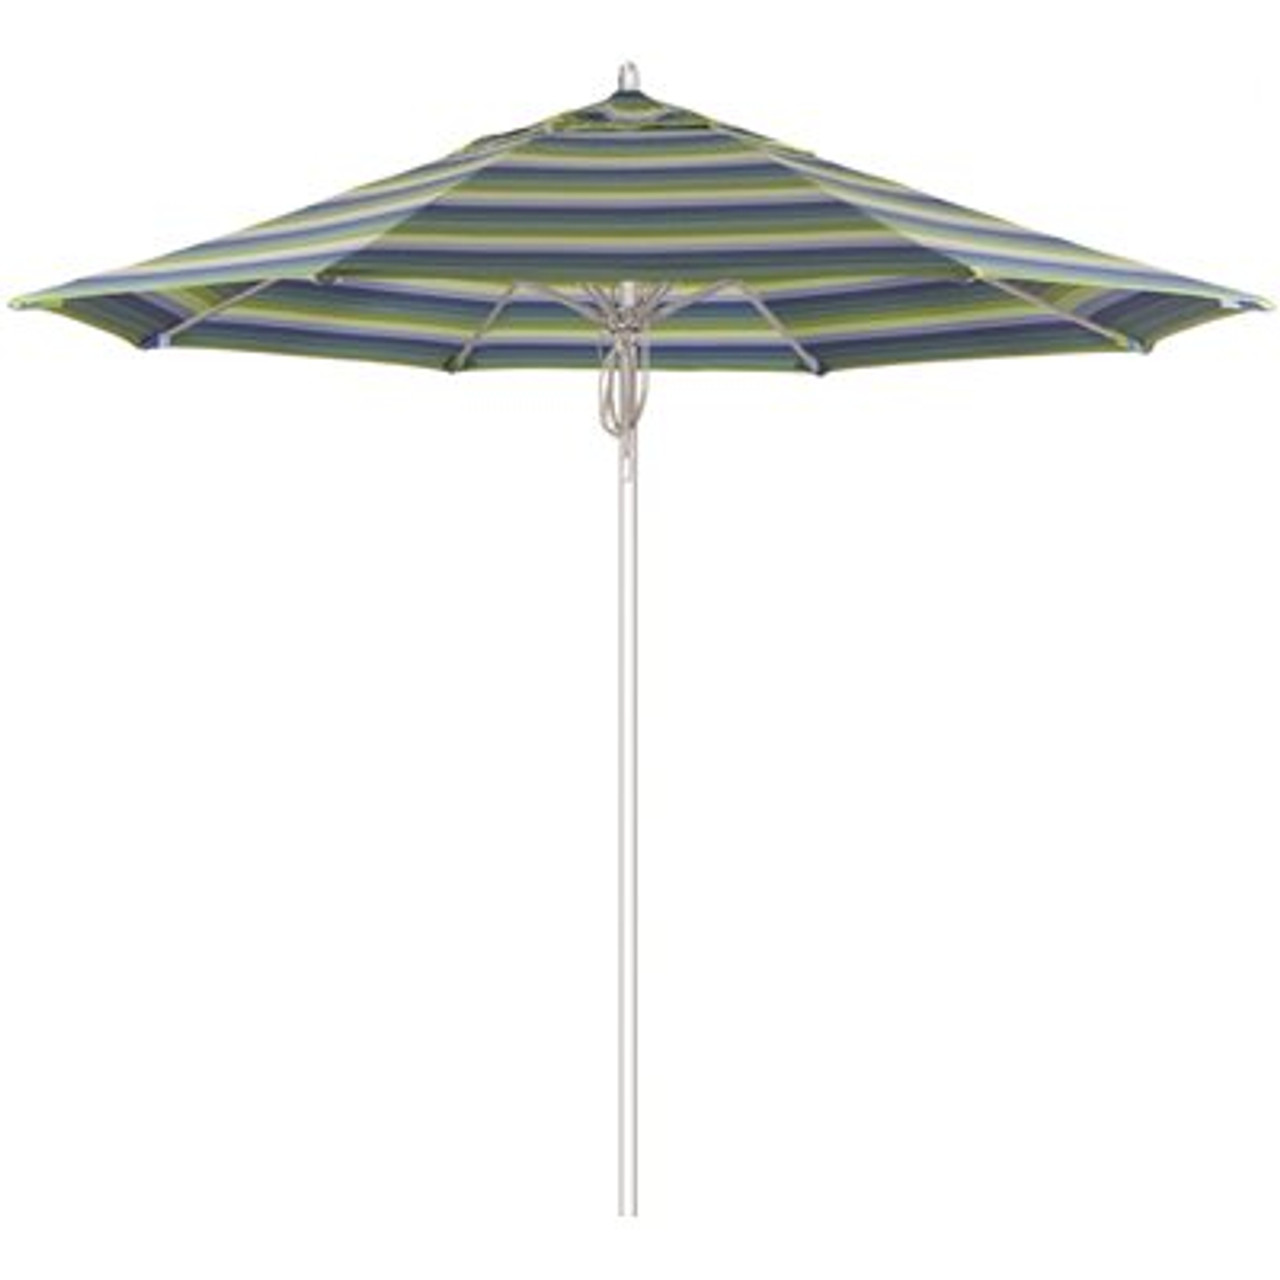 9 ft. Silver Aluminum Commercial Fiberglass Ribs Market Patio Umbrella and Pulley Lift in Seville Seaside Sunbrella